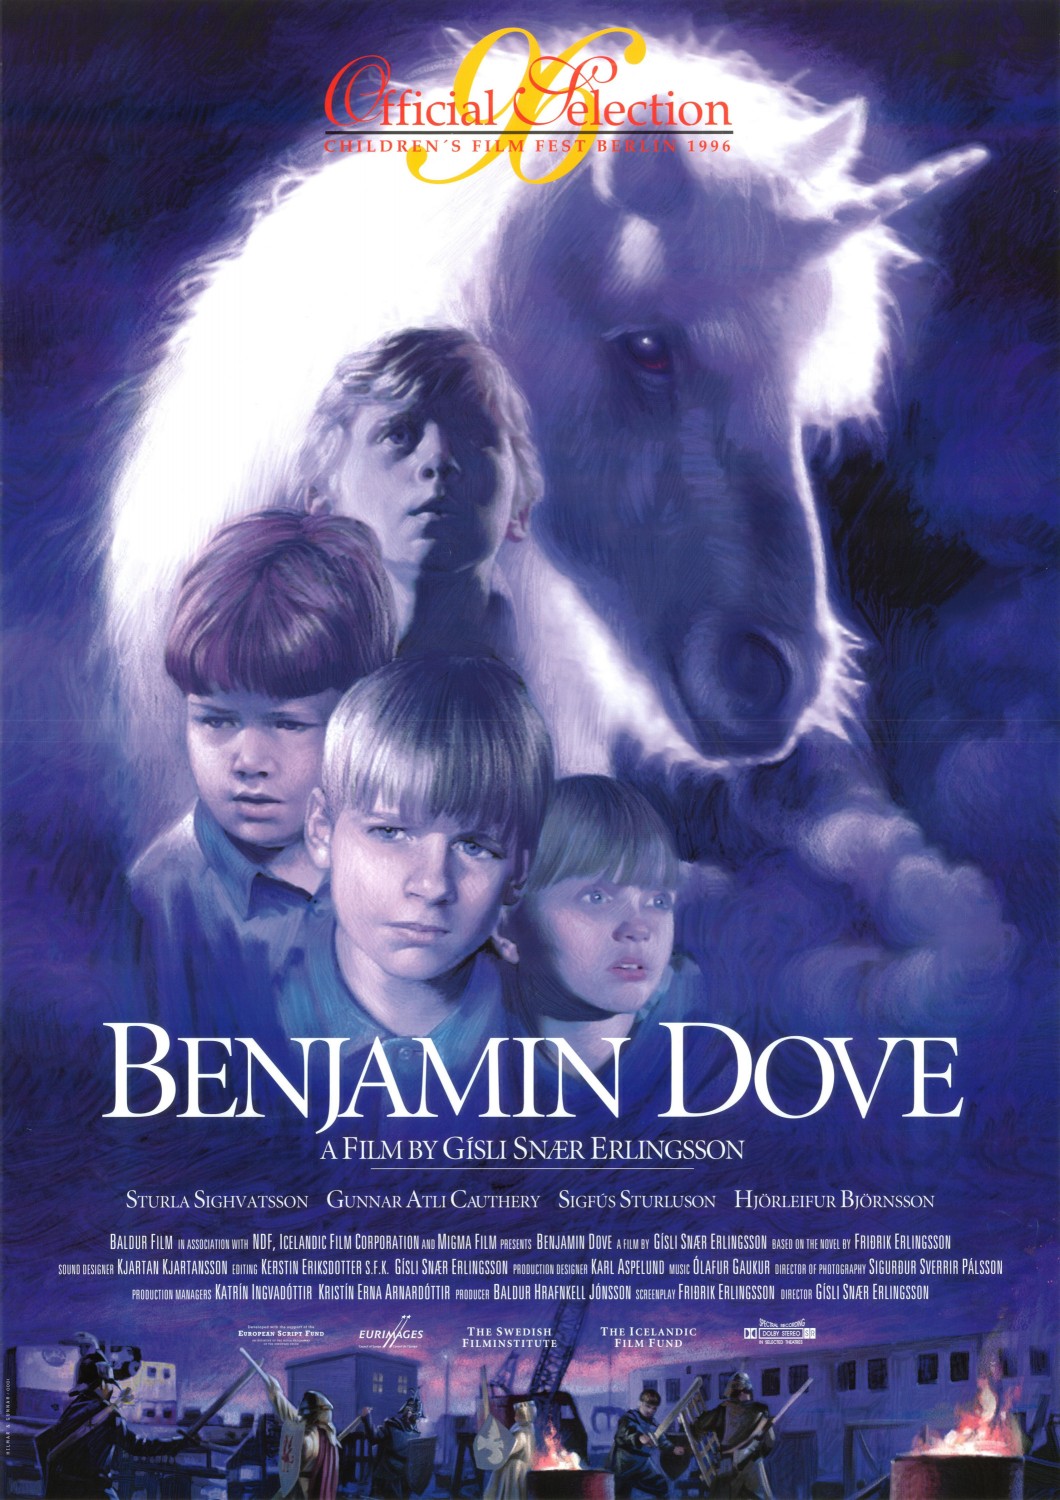 Extra Large Movie Poster Image for Benjamín dúfa 